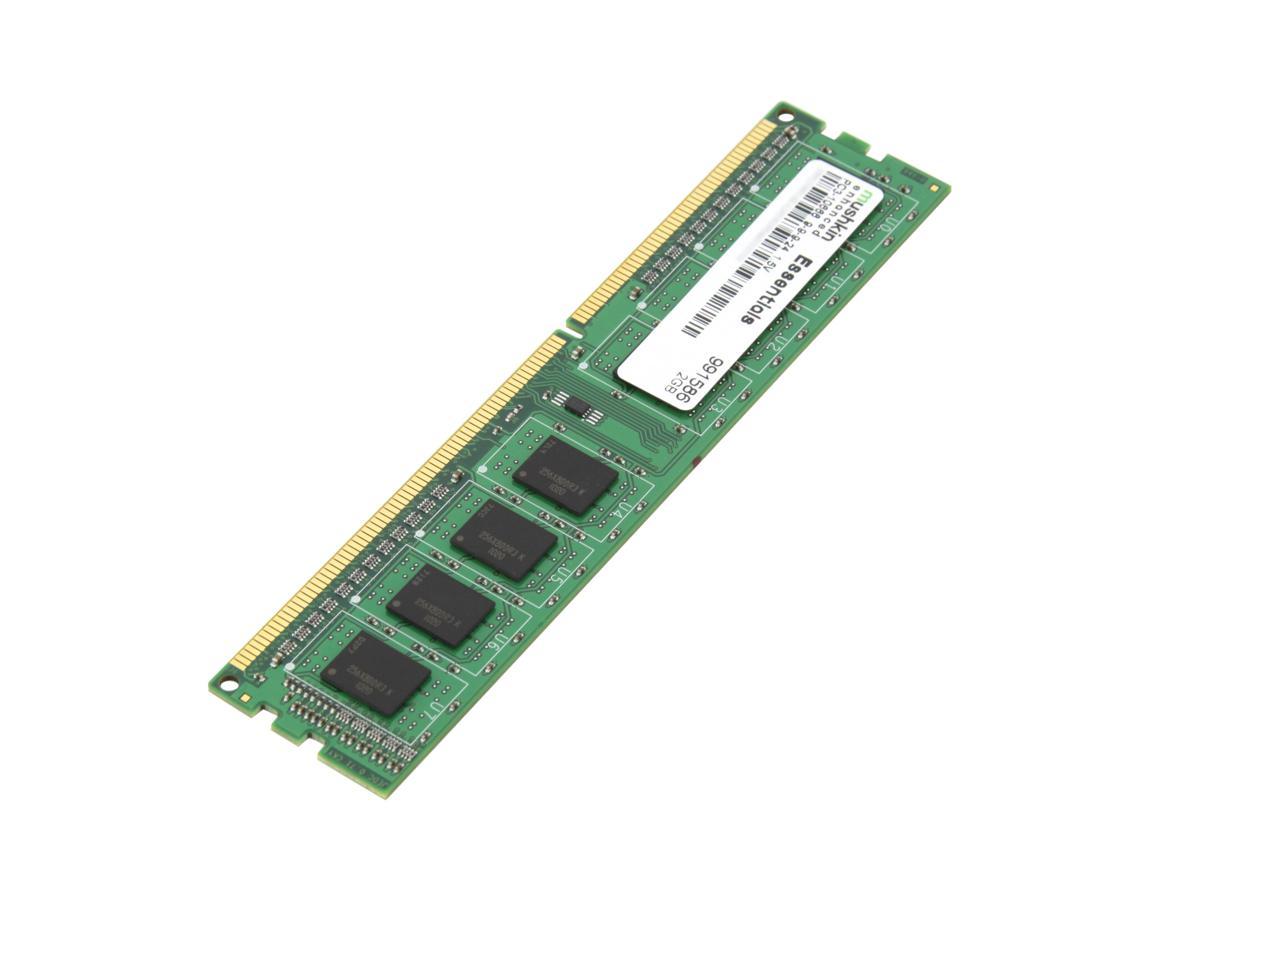 Mushkin Enhanced Essentials 2GB DDR3 1333 (PC3 10666) Desktop 